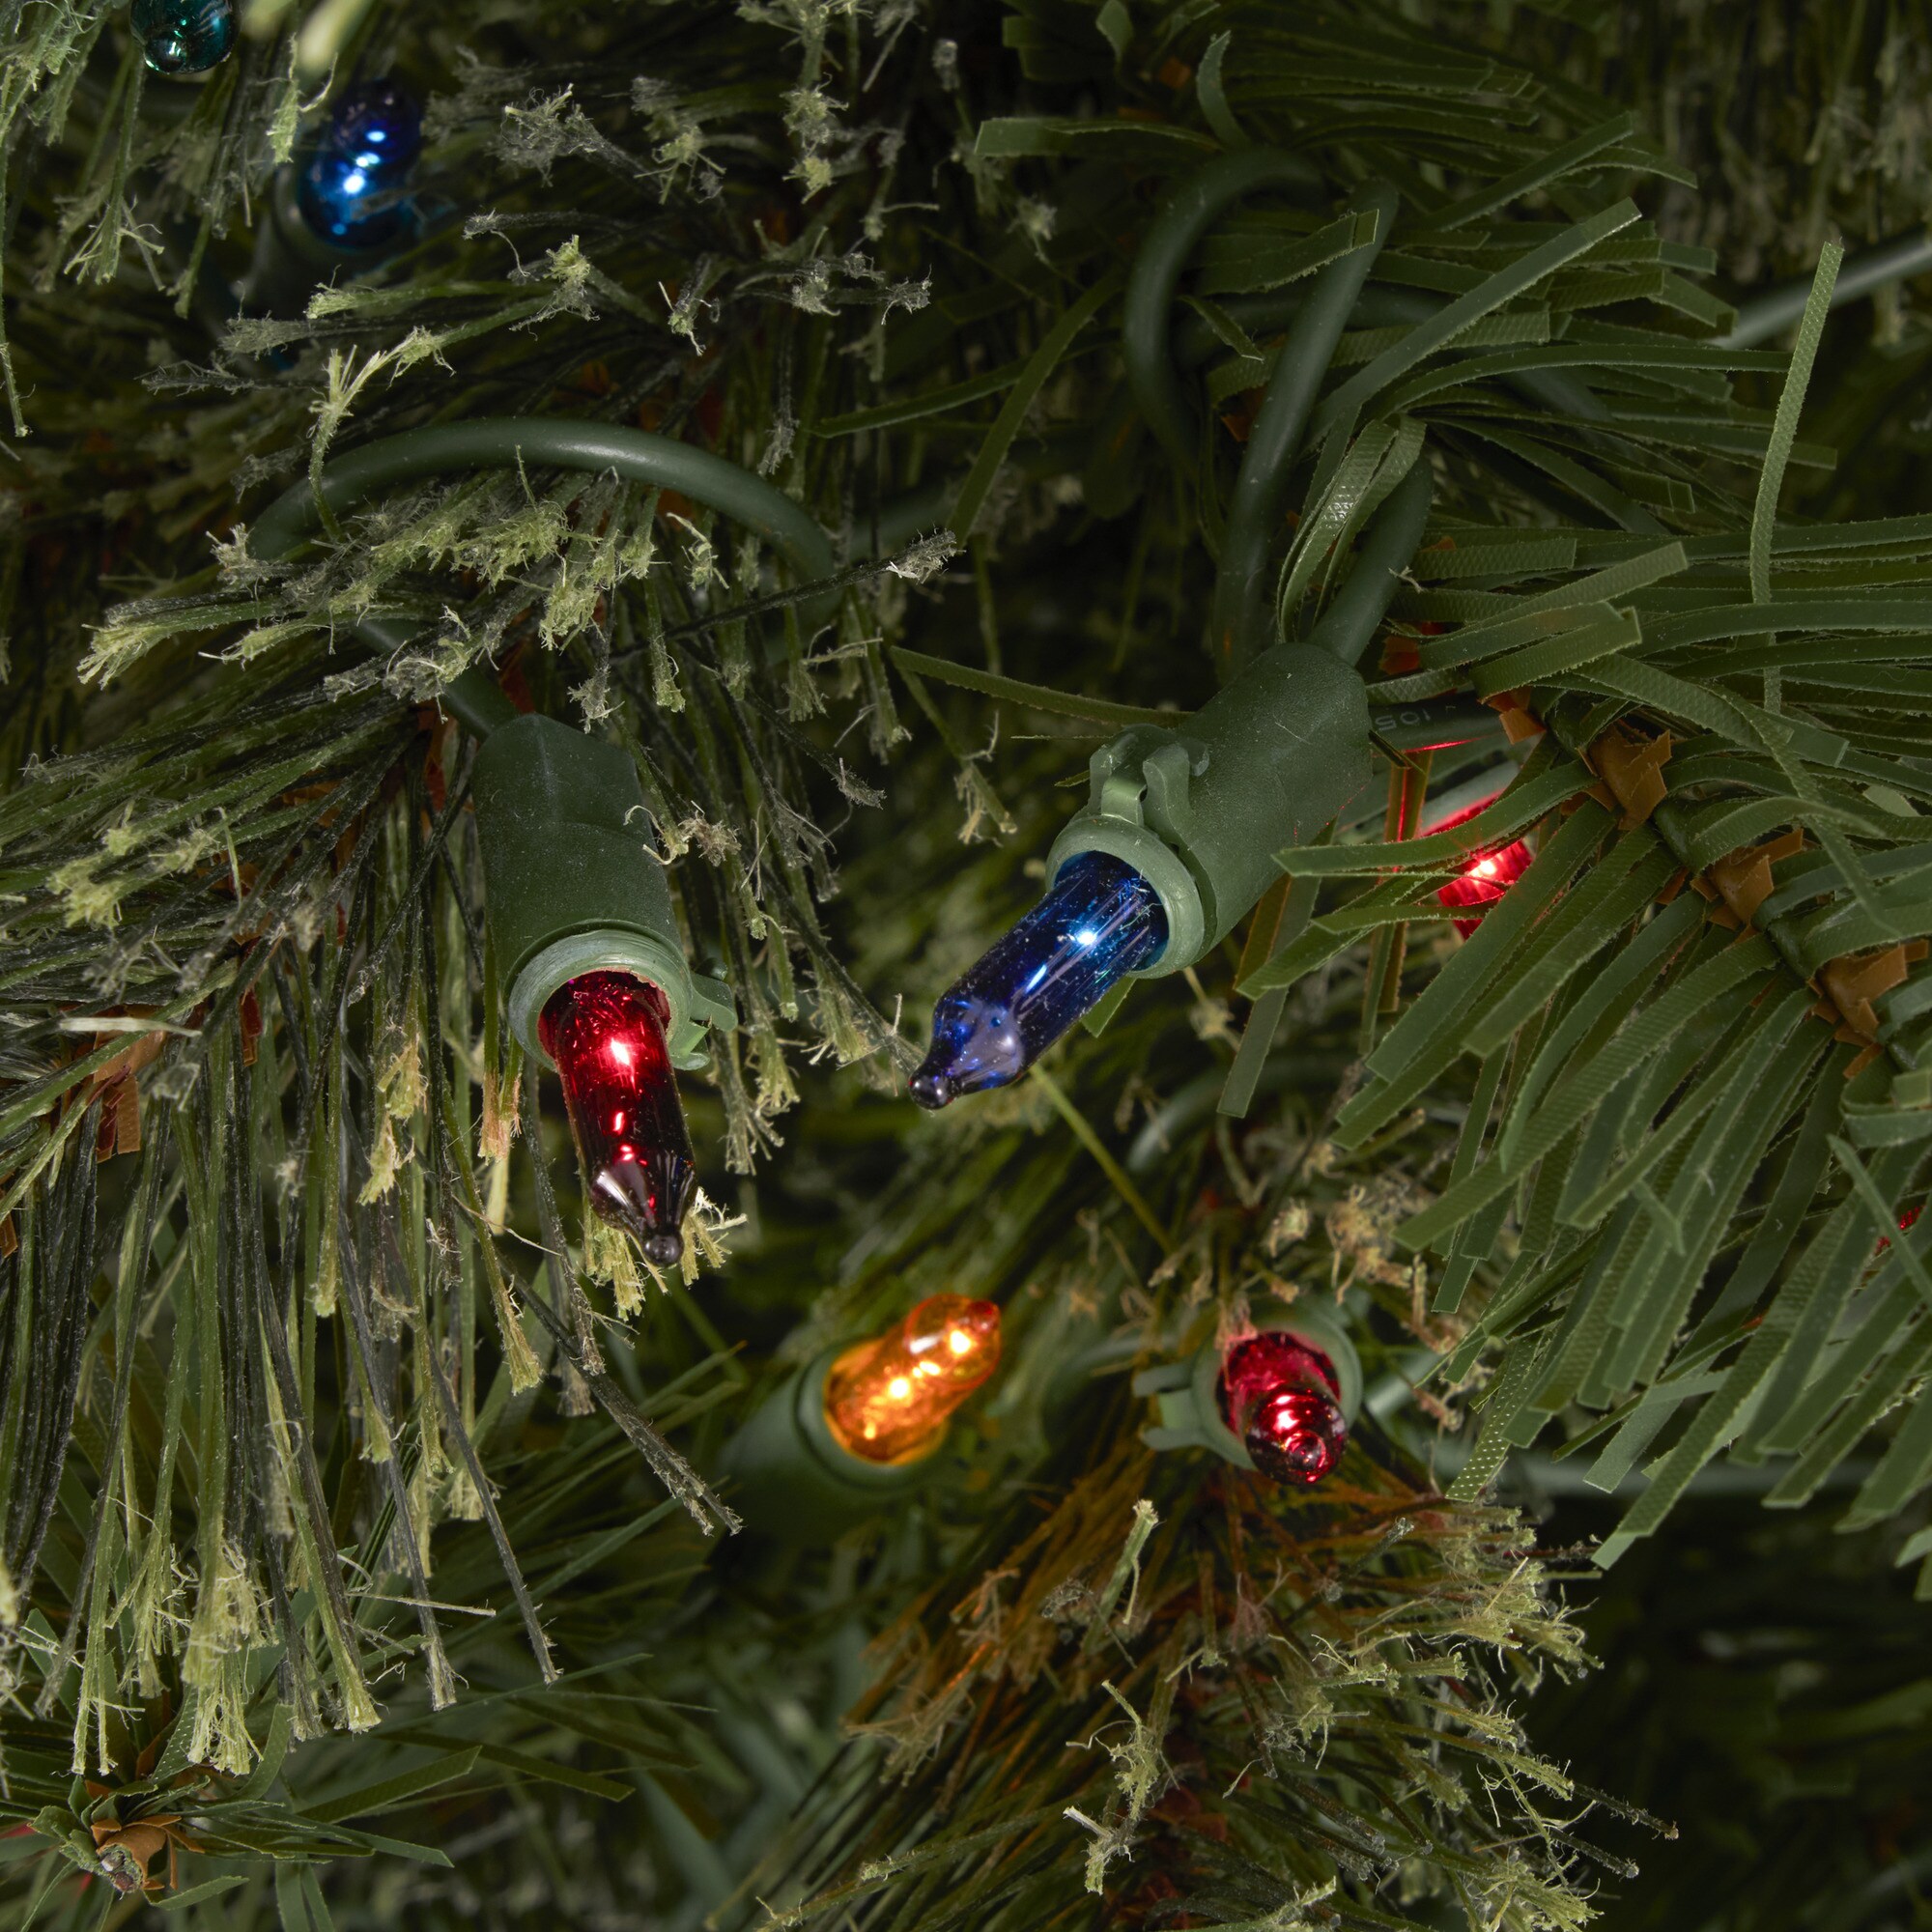 Wireless Christmas Tree Light Controller - Wondershop™